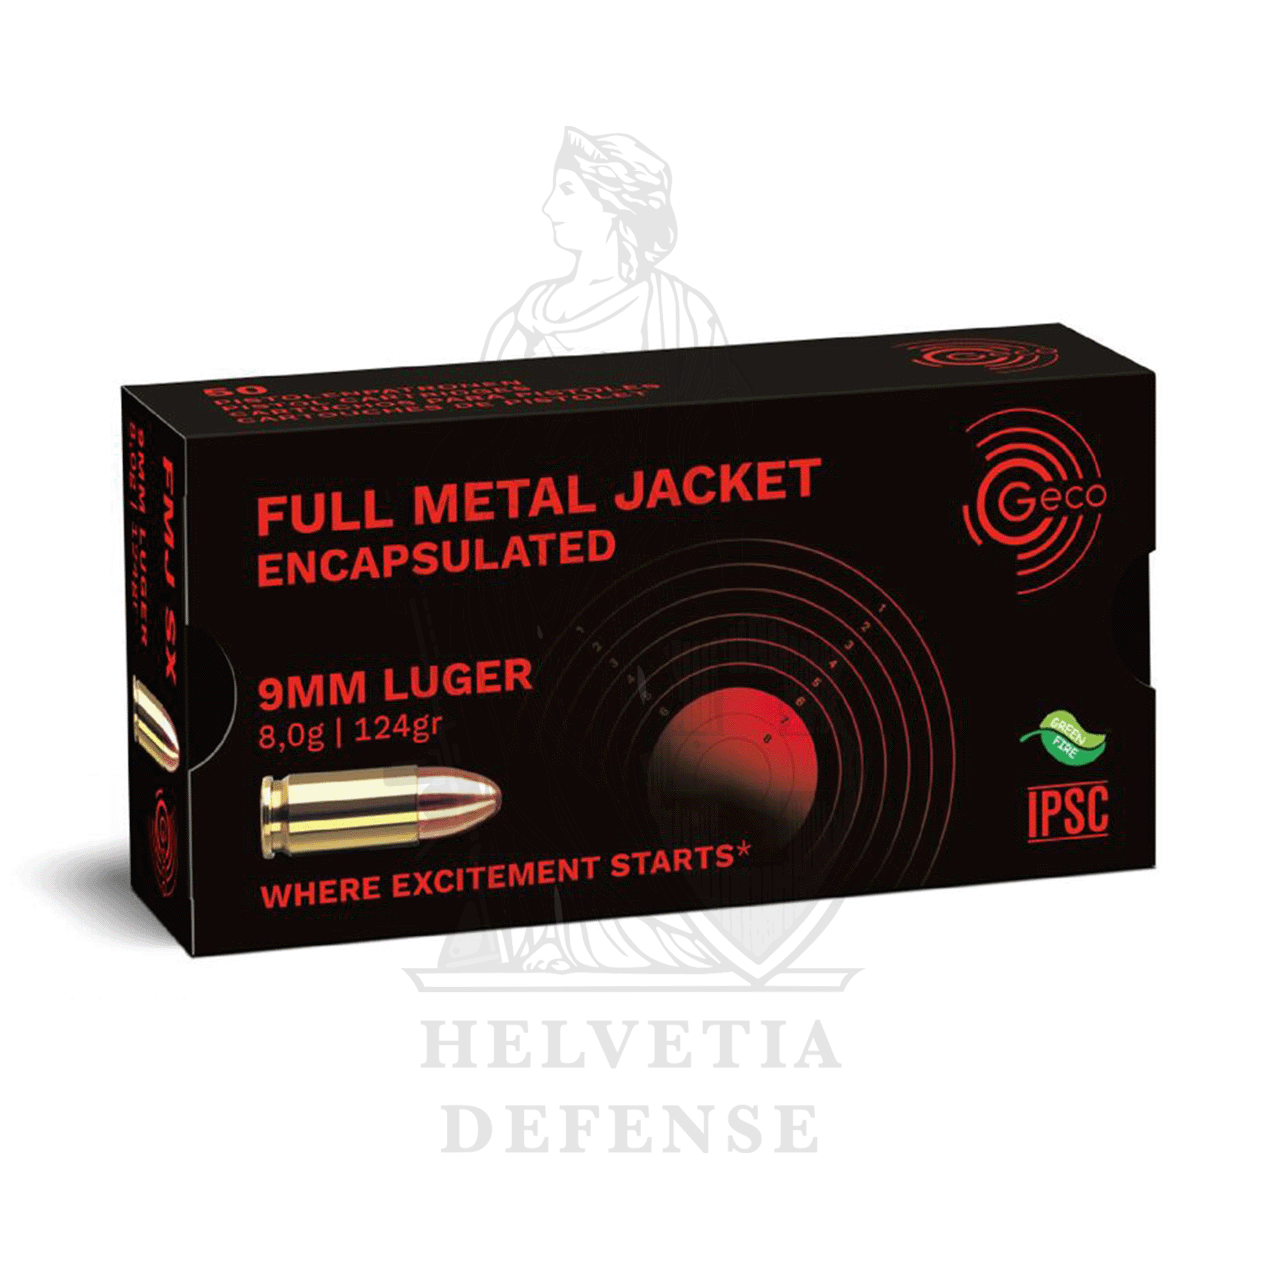 Pistol cartridges GECO 9mm Para/Luger Encapsulated FMJ/VM - 124grs/8.0g - 50 rounds SINTOX, 2318221